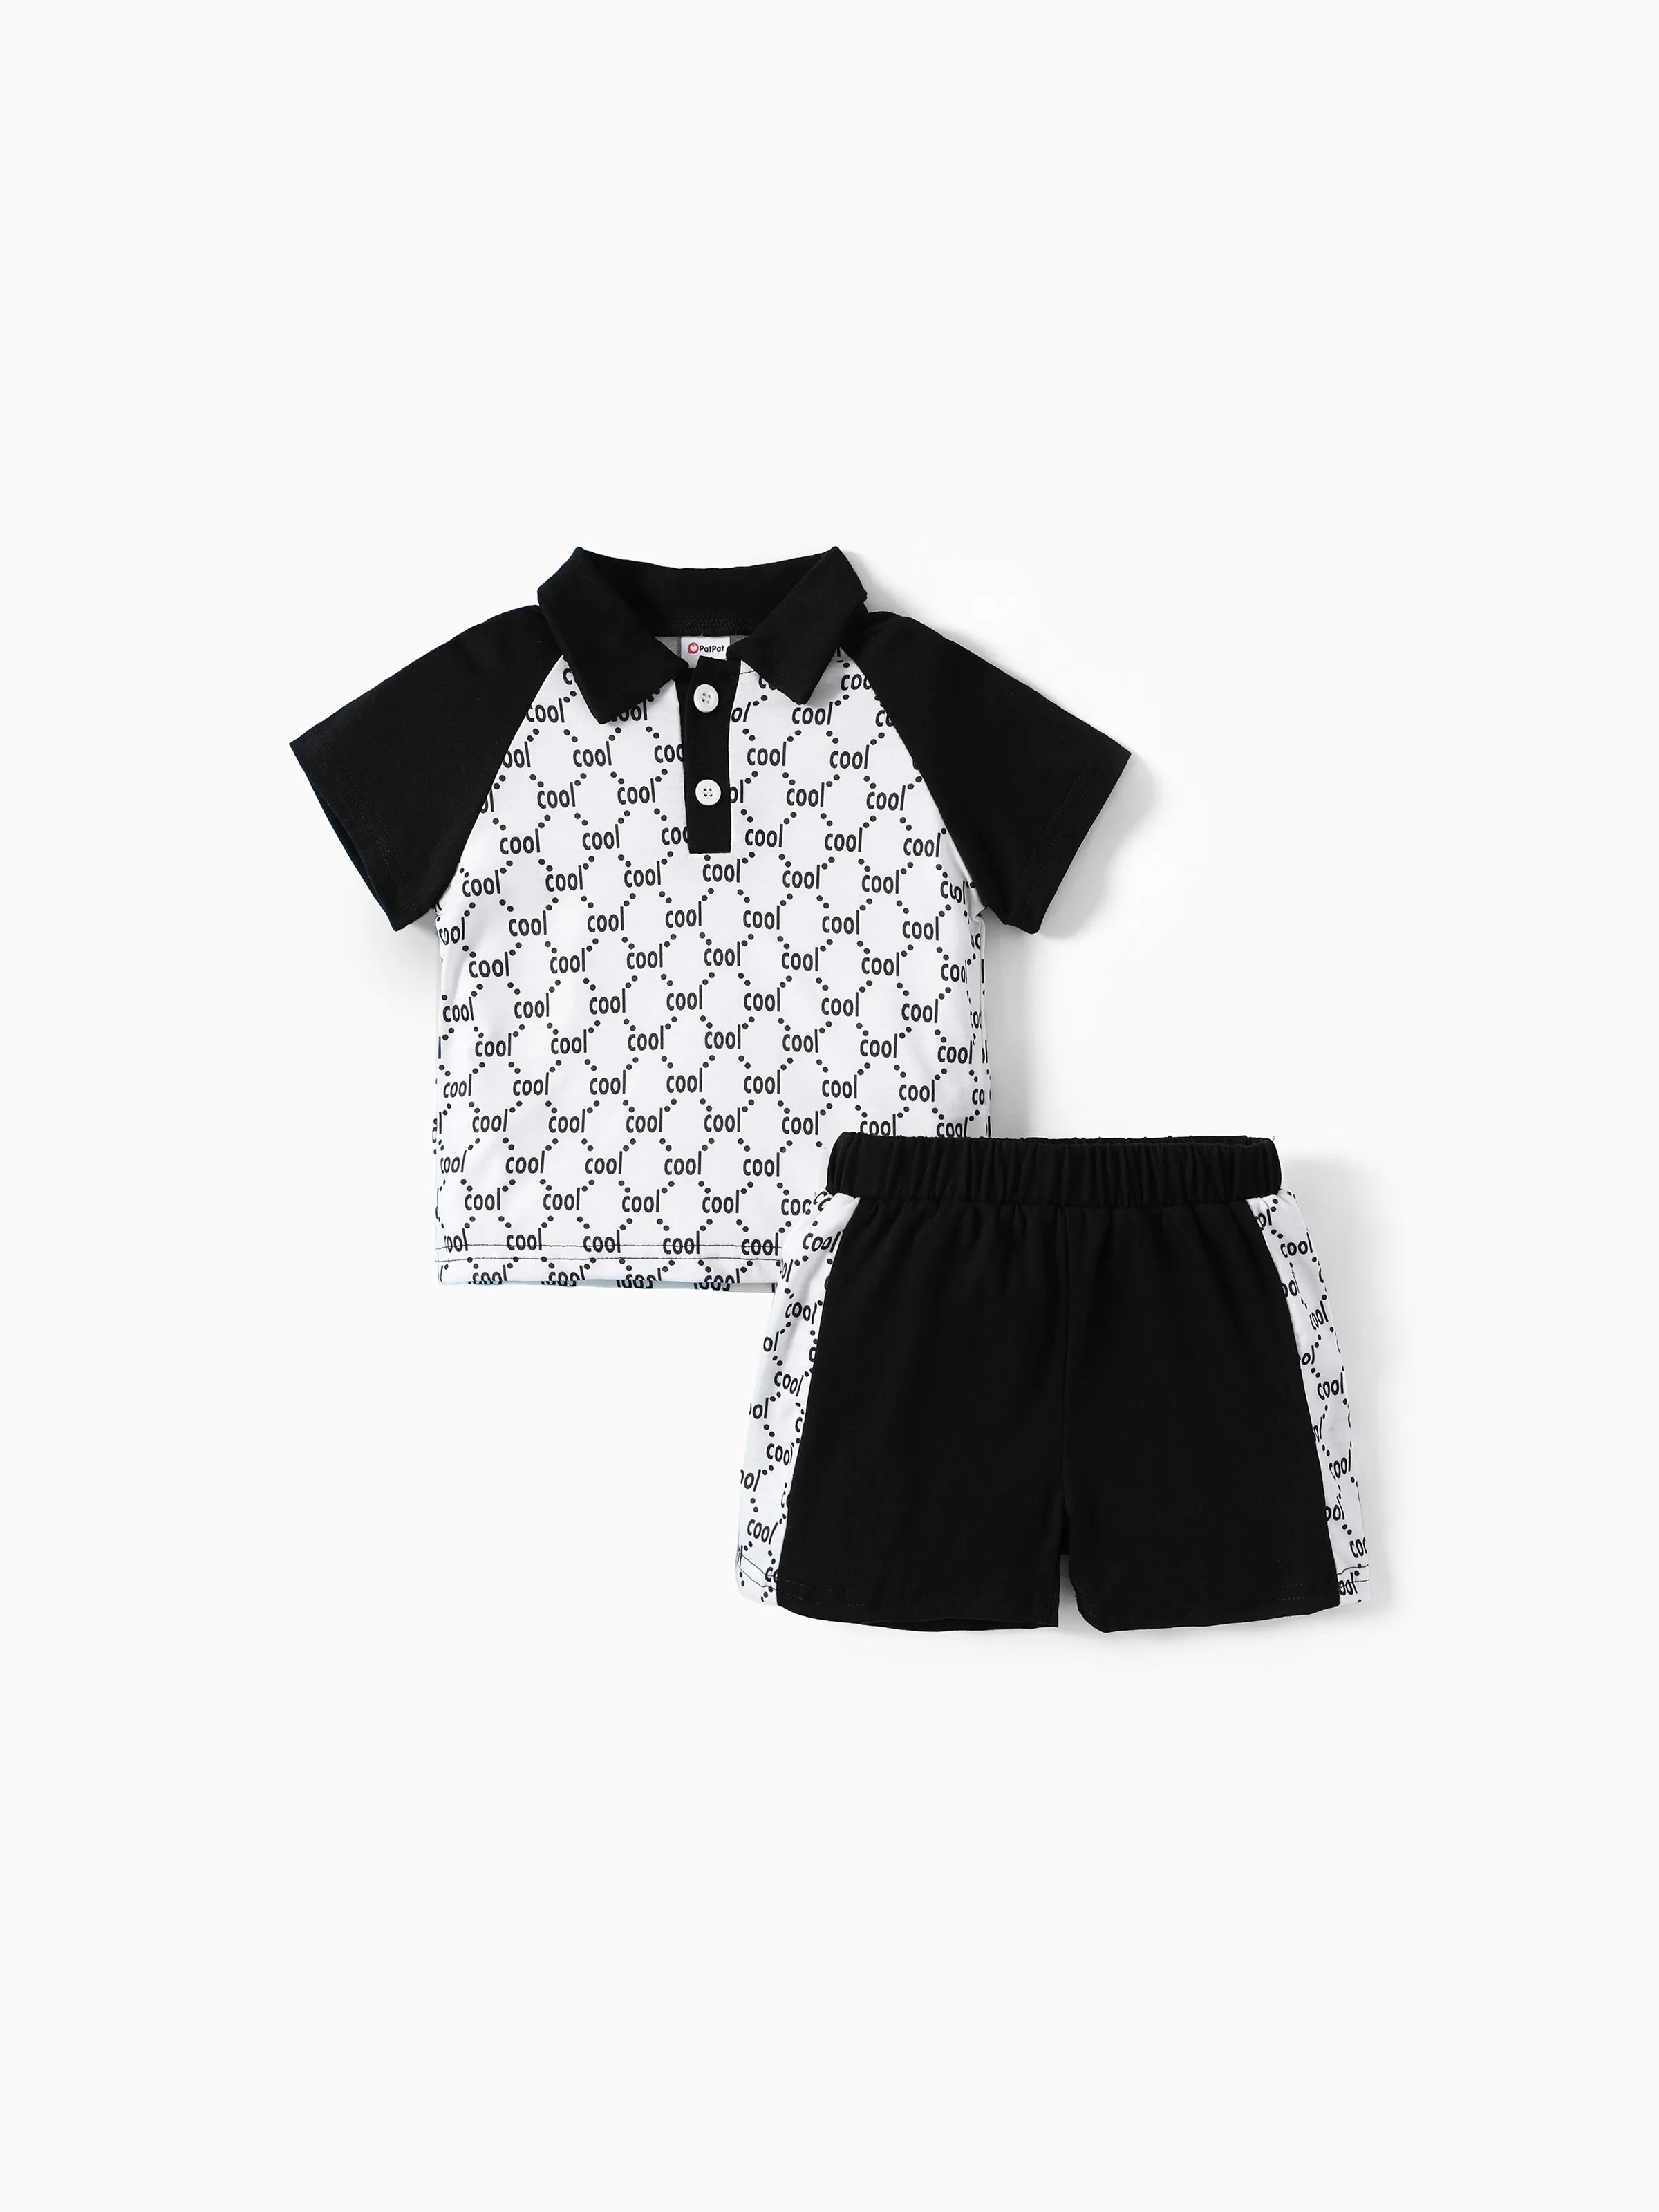 

Boy's Short Sleeve Shirt and Black Shorts Set, Avant-garde Style with Shirt Collar, 2pcs